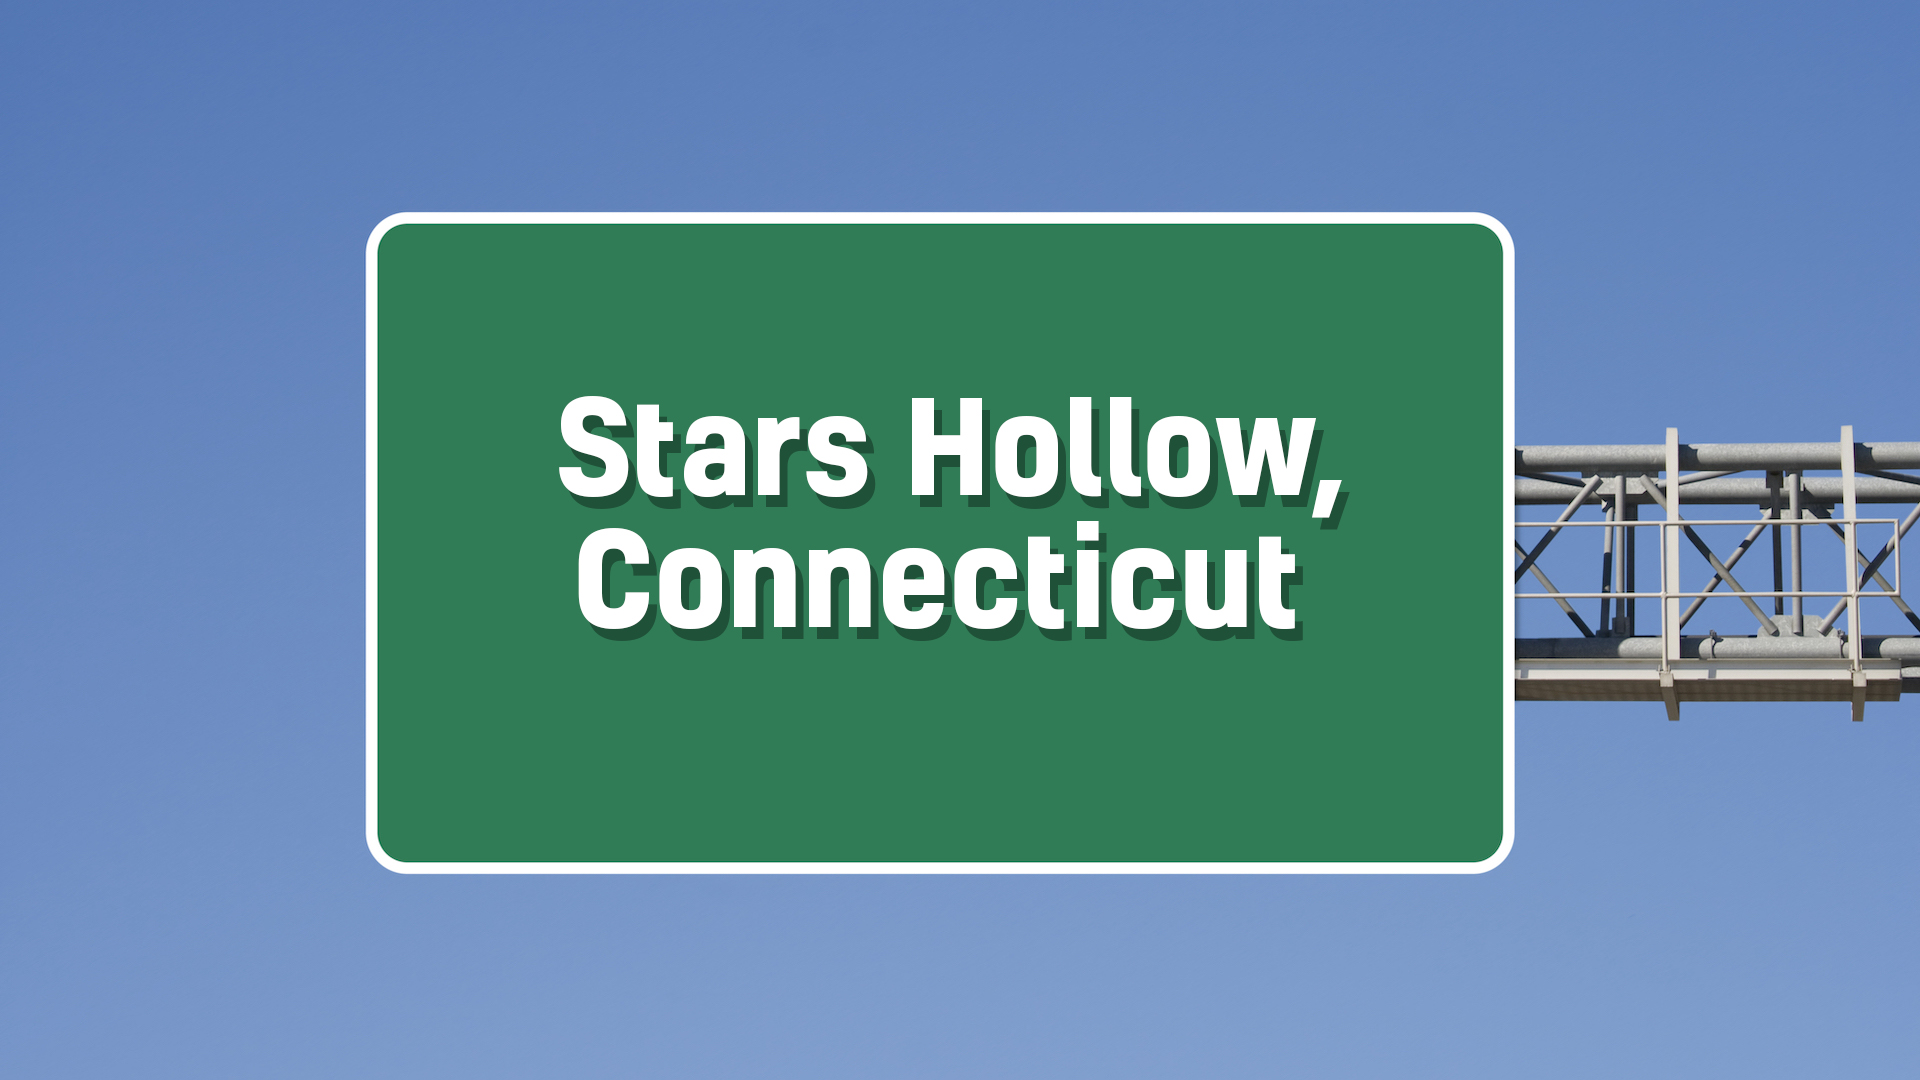 Stars Hollow, Connecticut